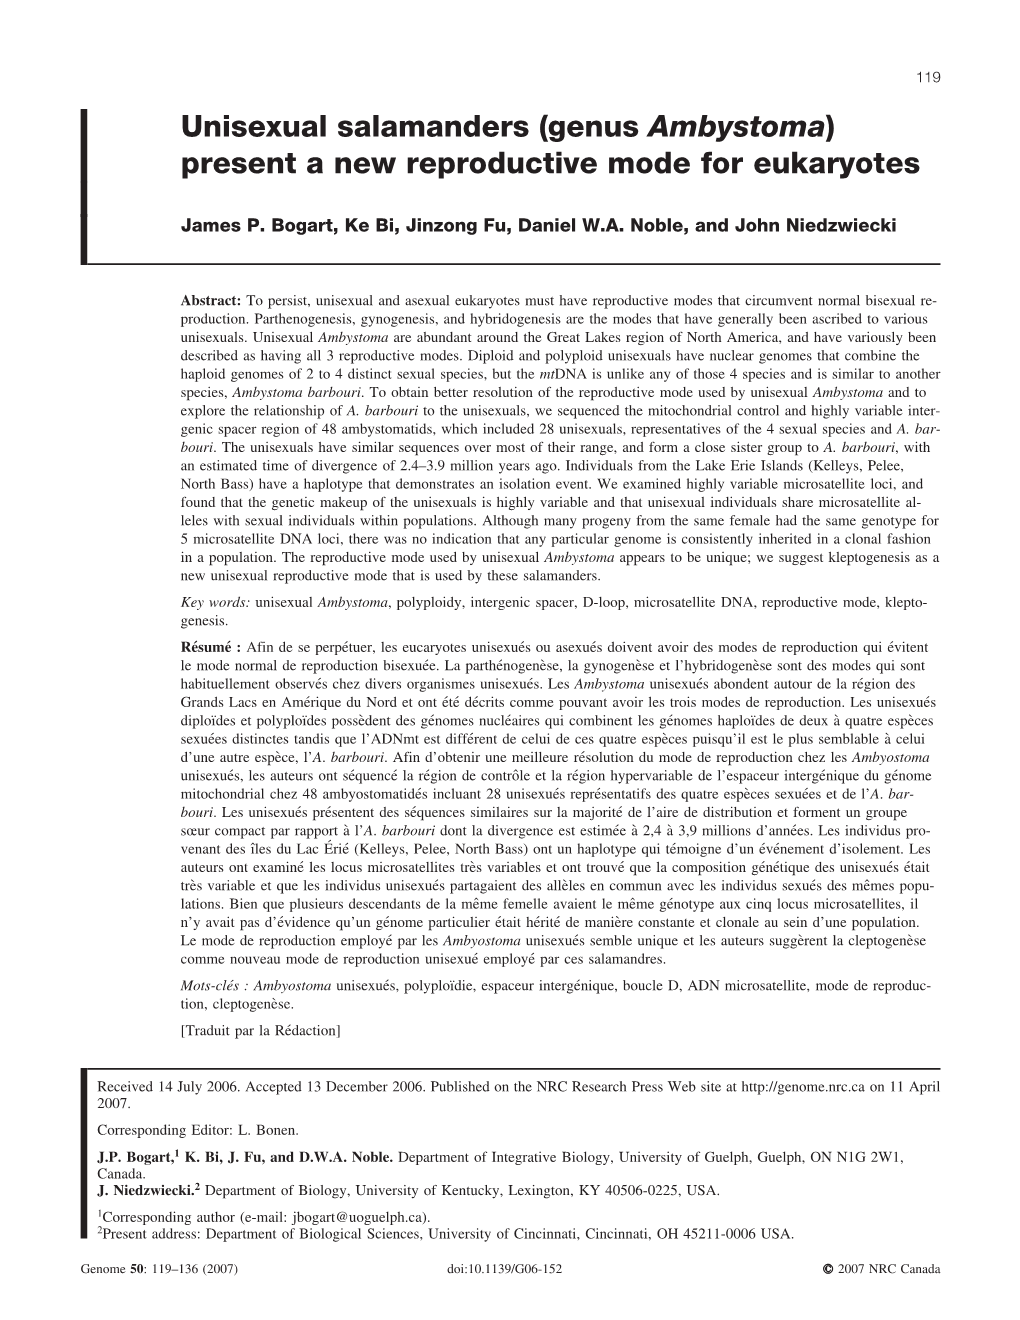 (Genus Ambystoma) Present a New Reproductive Mode for Eukaryotes